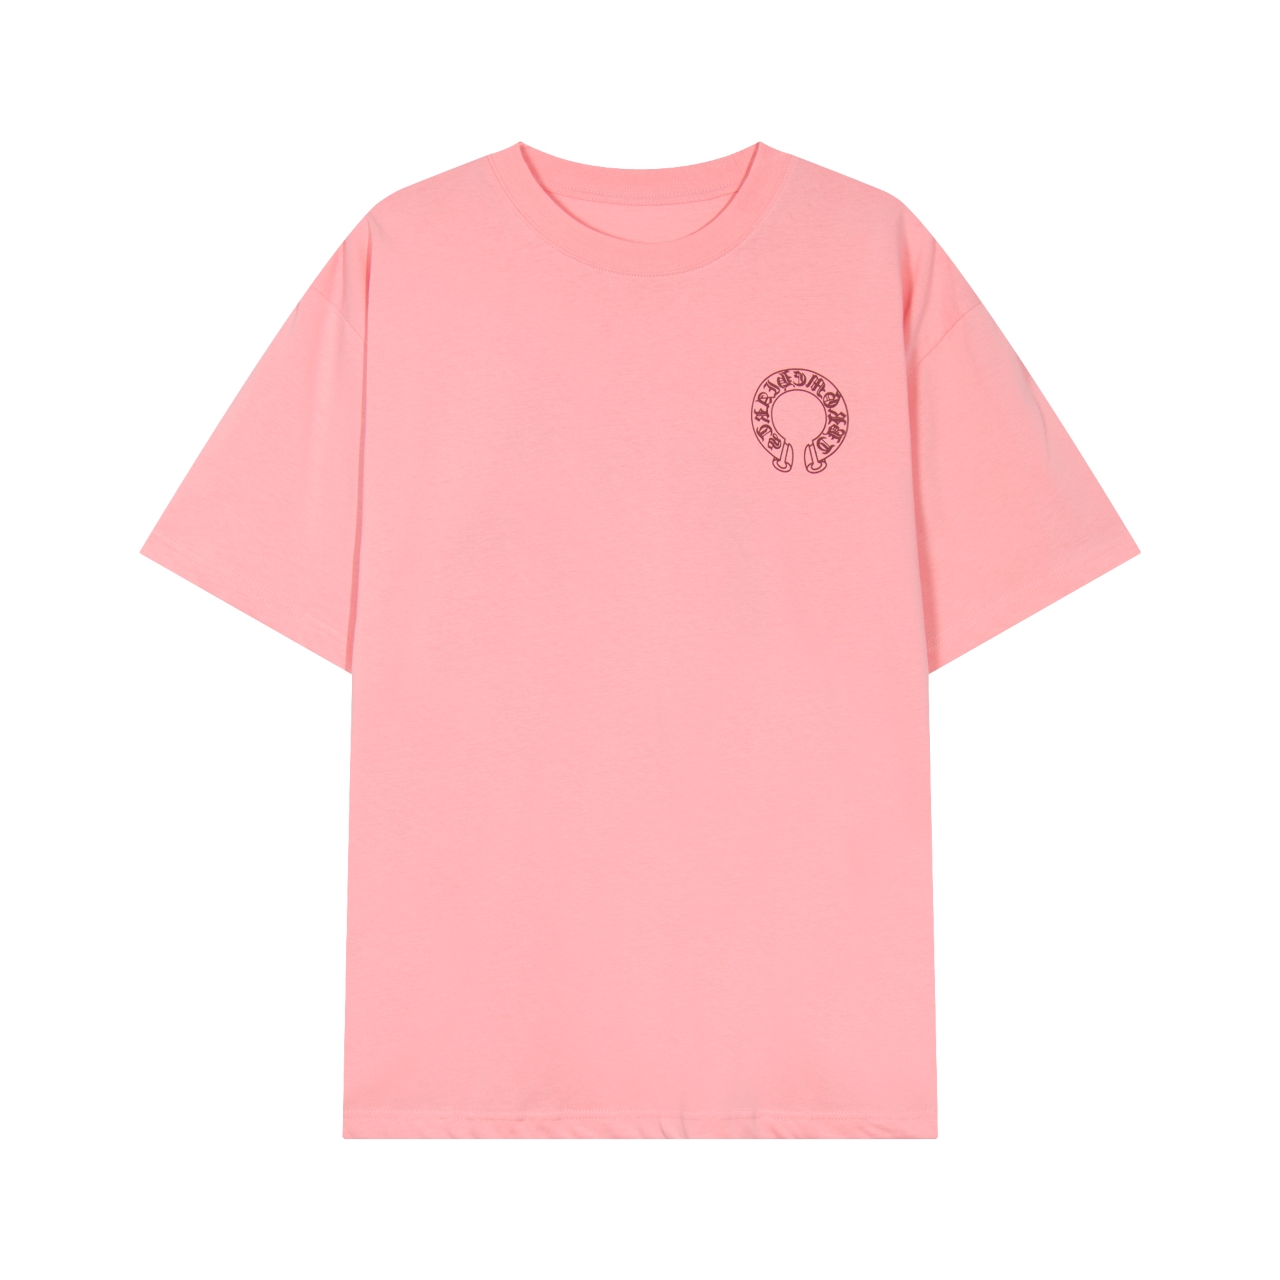 Chrome Hearts Clothing T-Shirt Pink Printing Short Sleeve